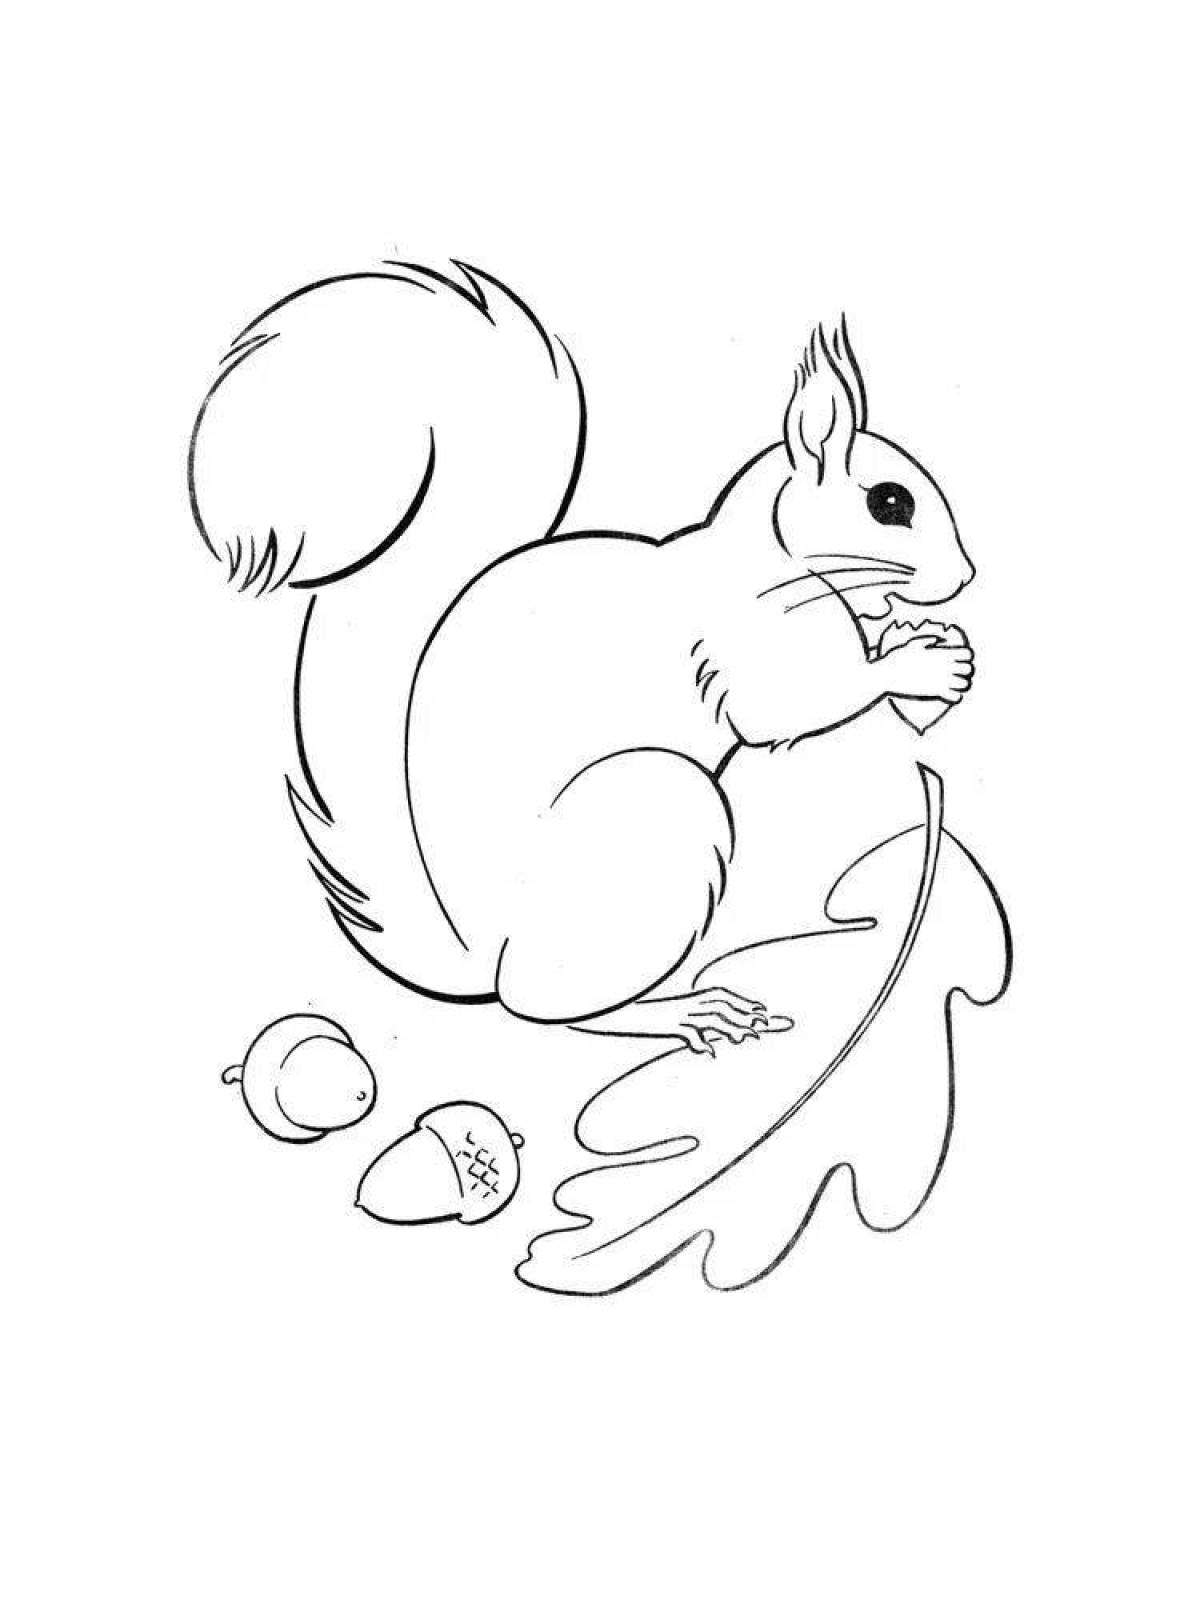 Sociable squirrel with a bump